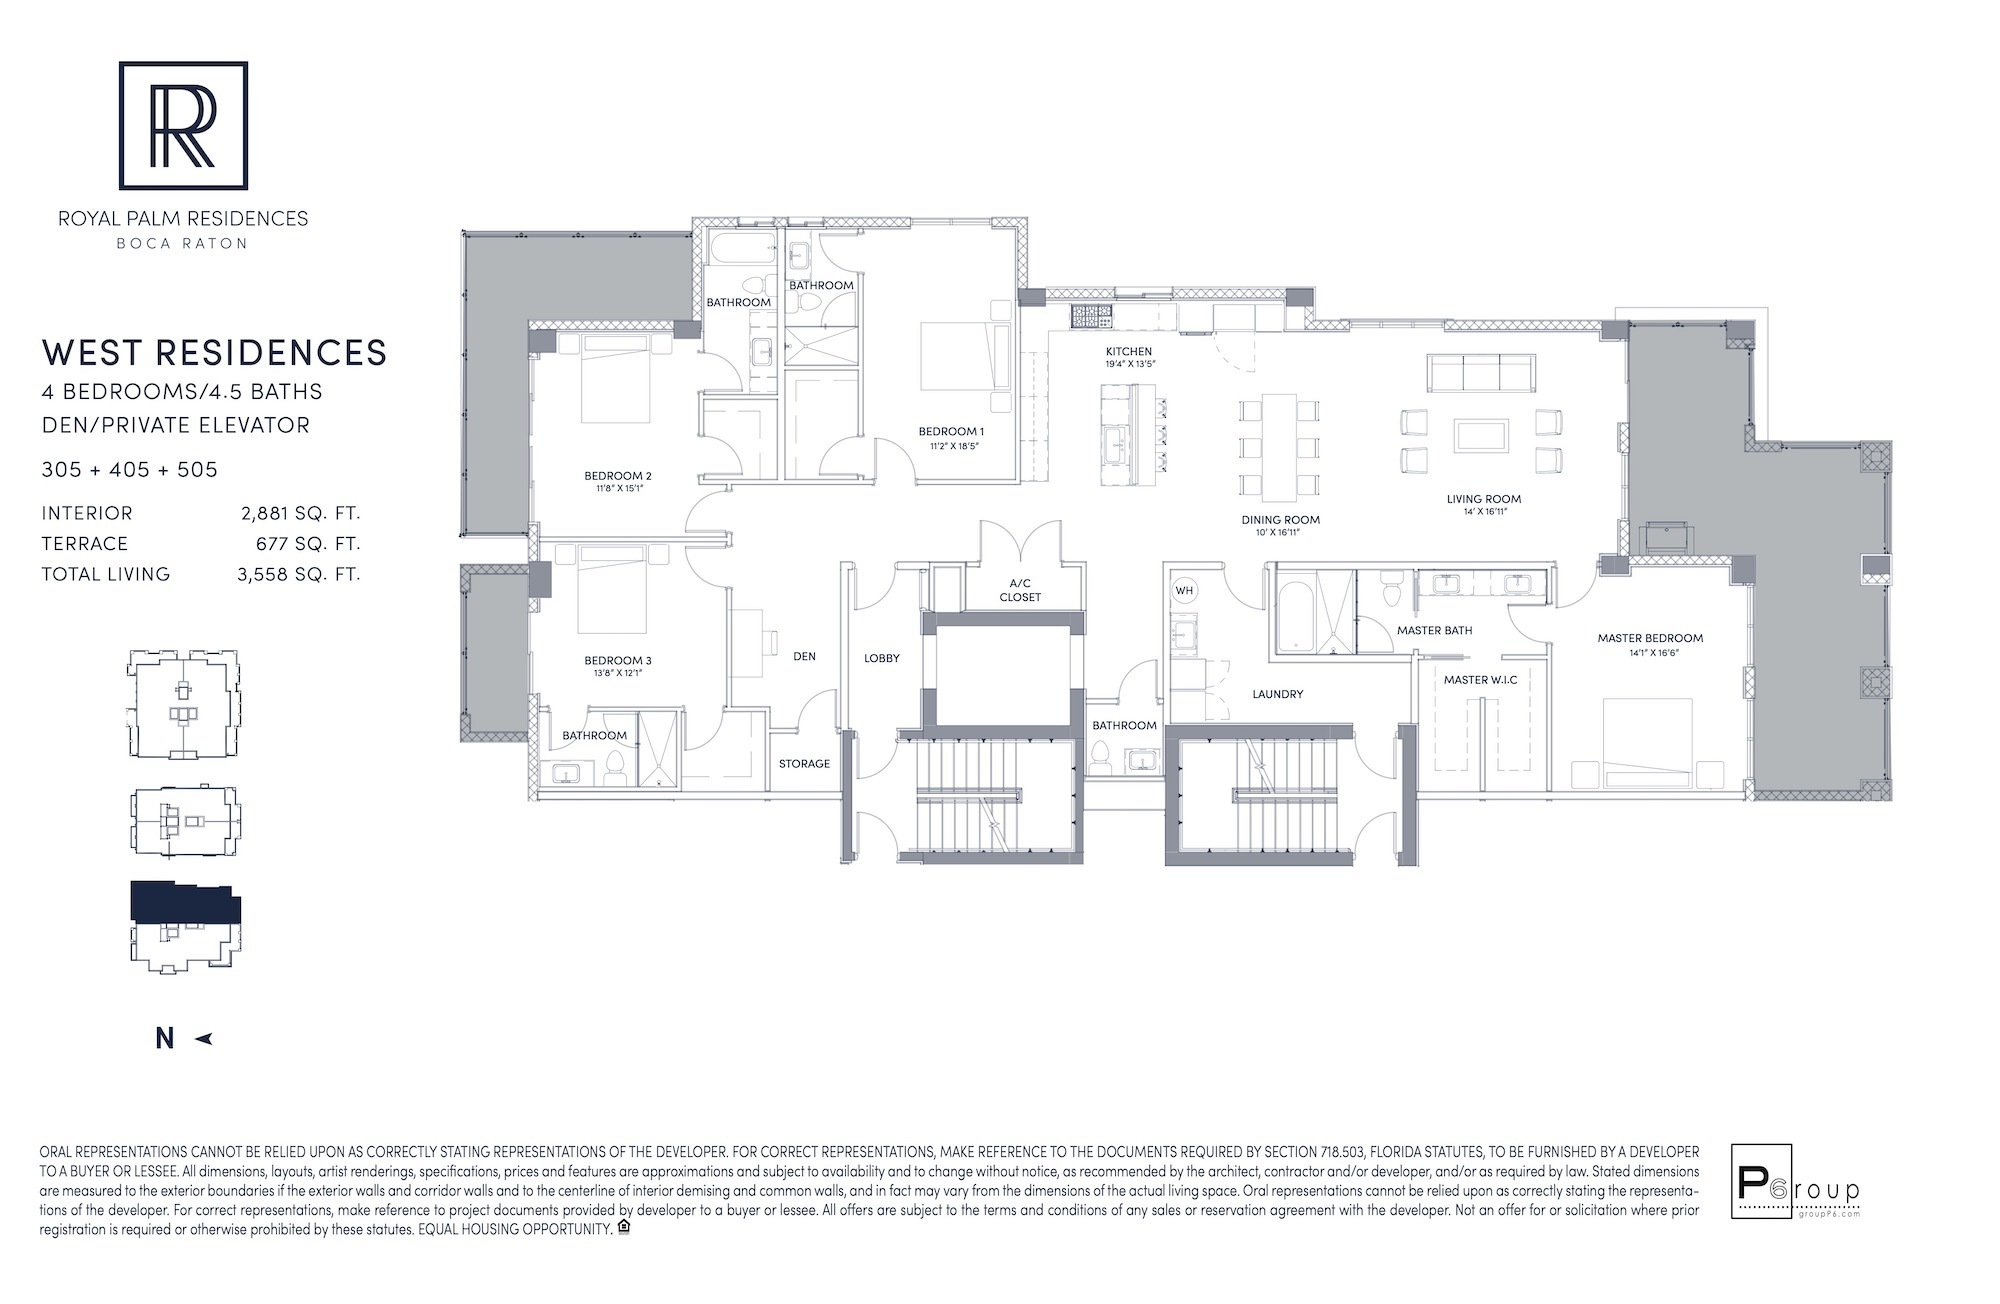 Floor Plan for Royal Palm Residences Floorplans, West Residences 305 + 405 + 505